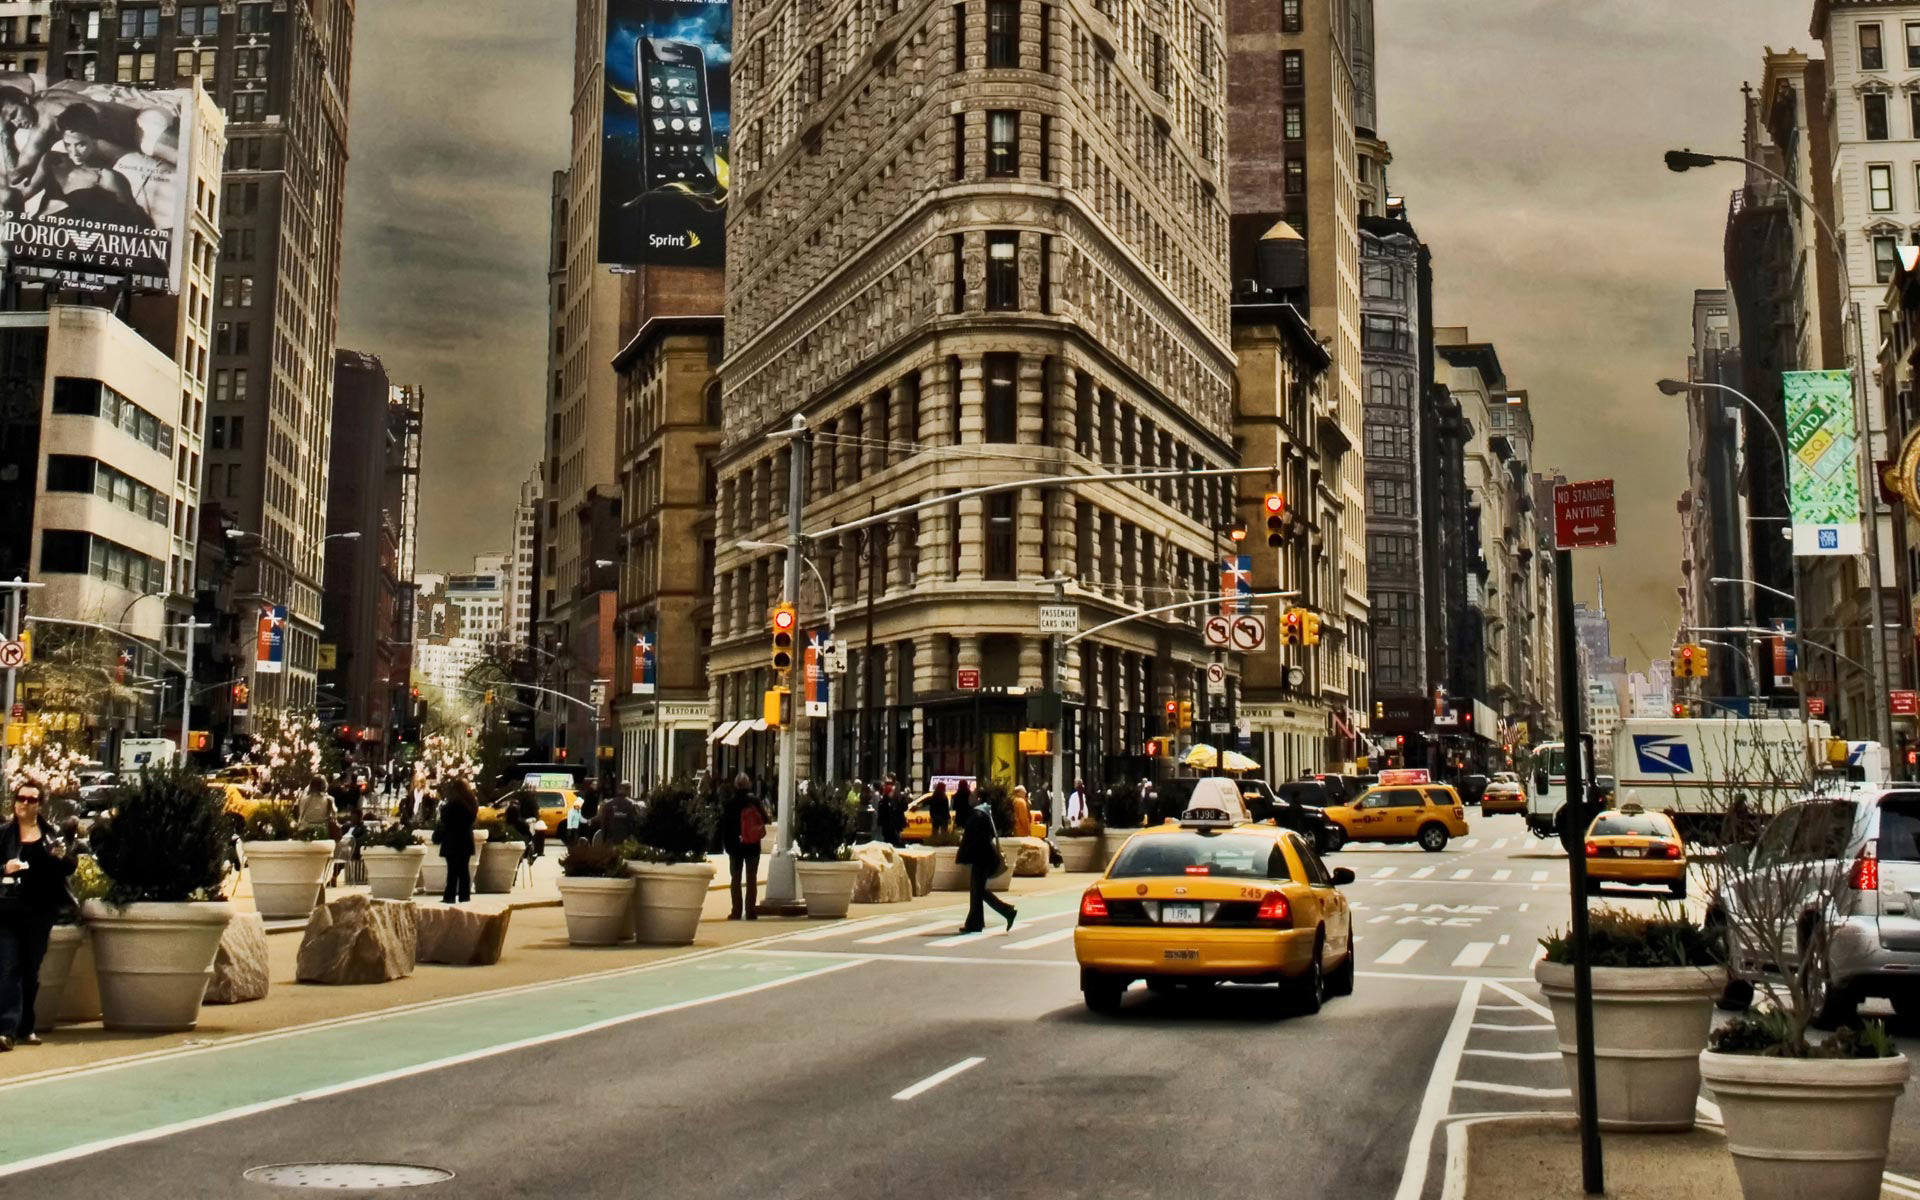 New york city street